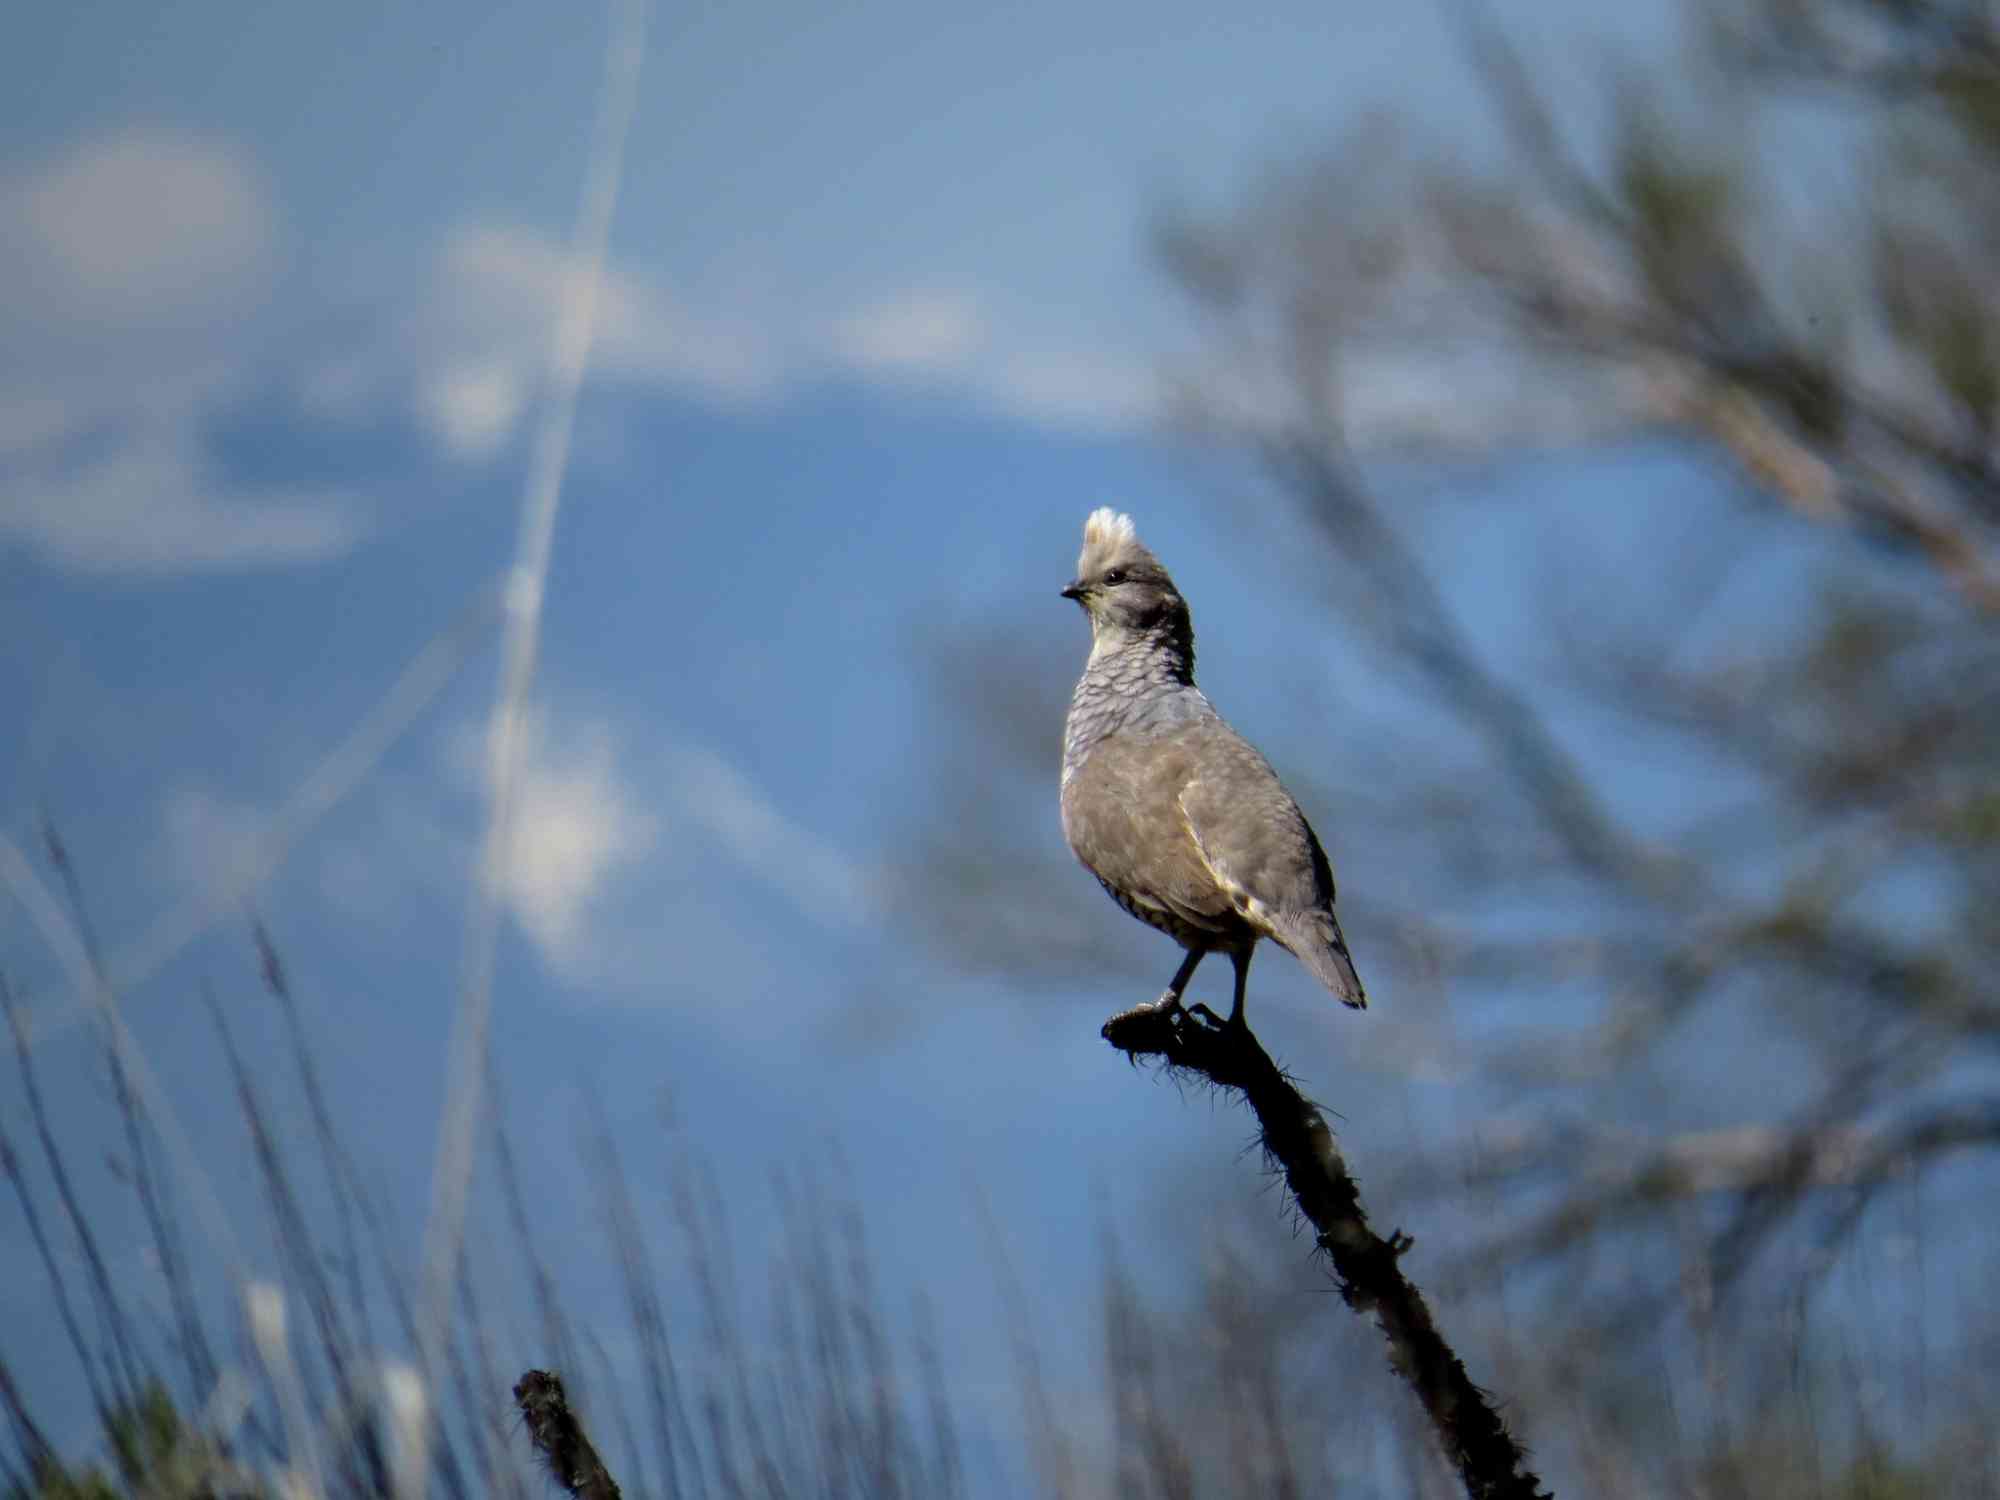 Scaled quail on twig